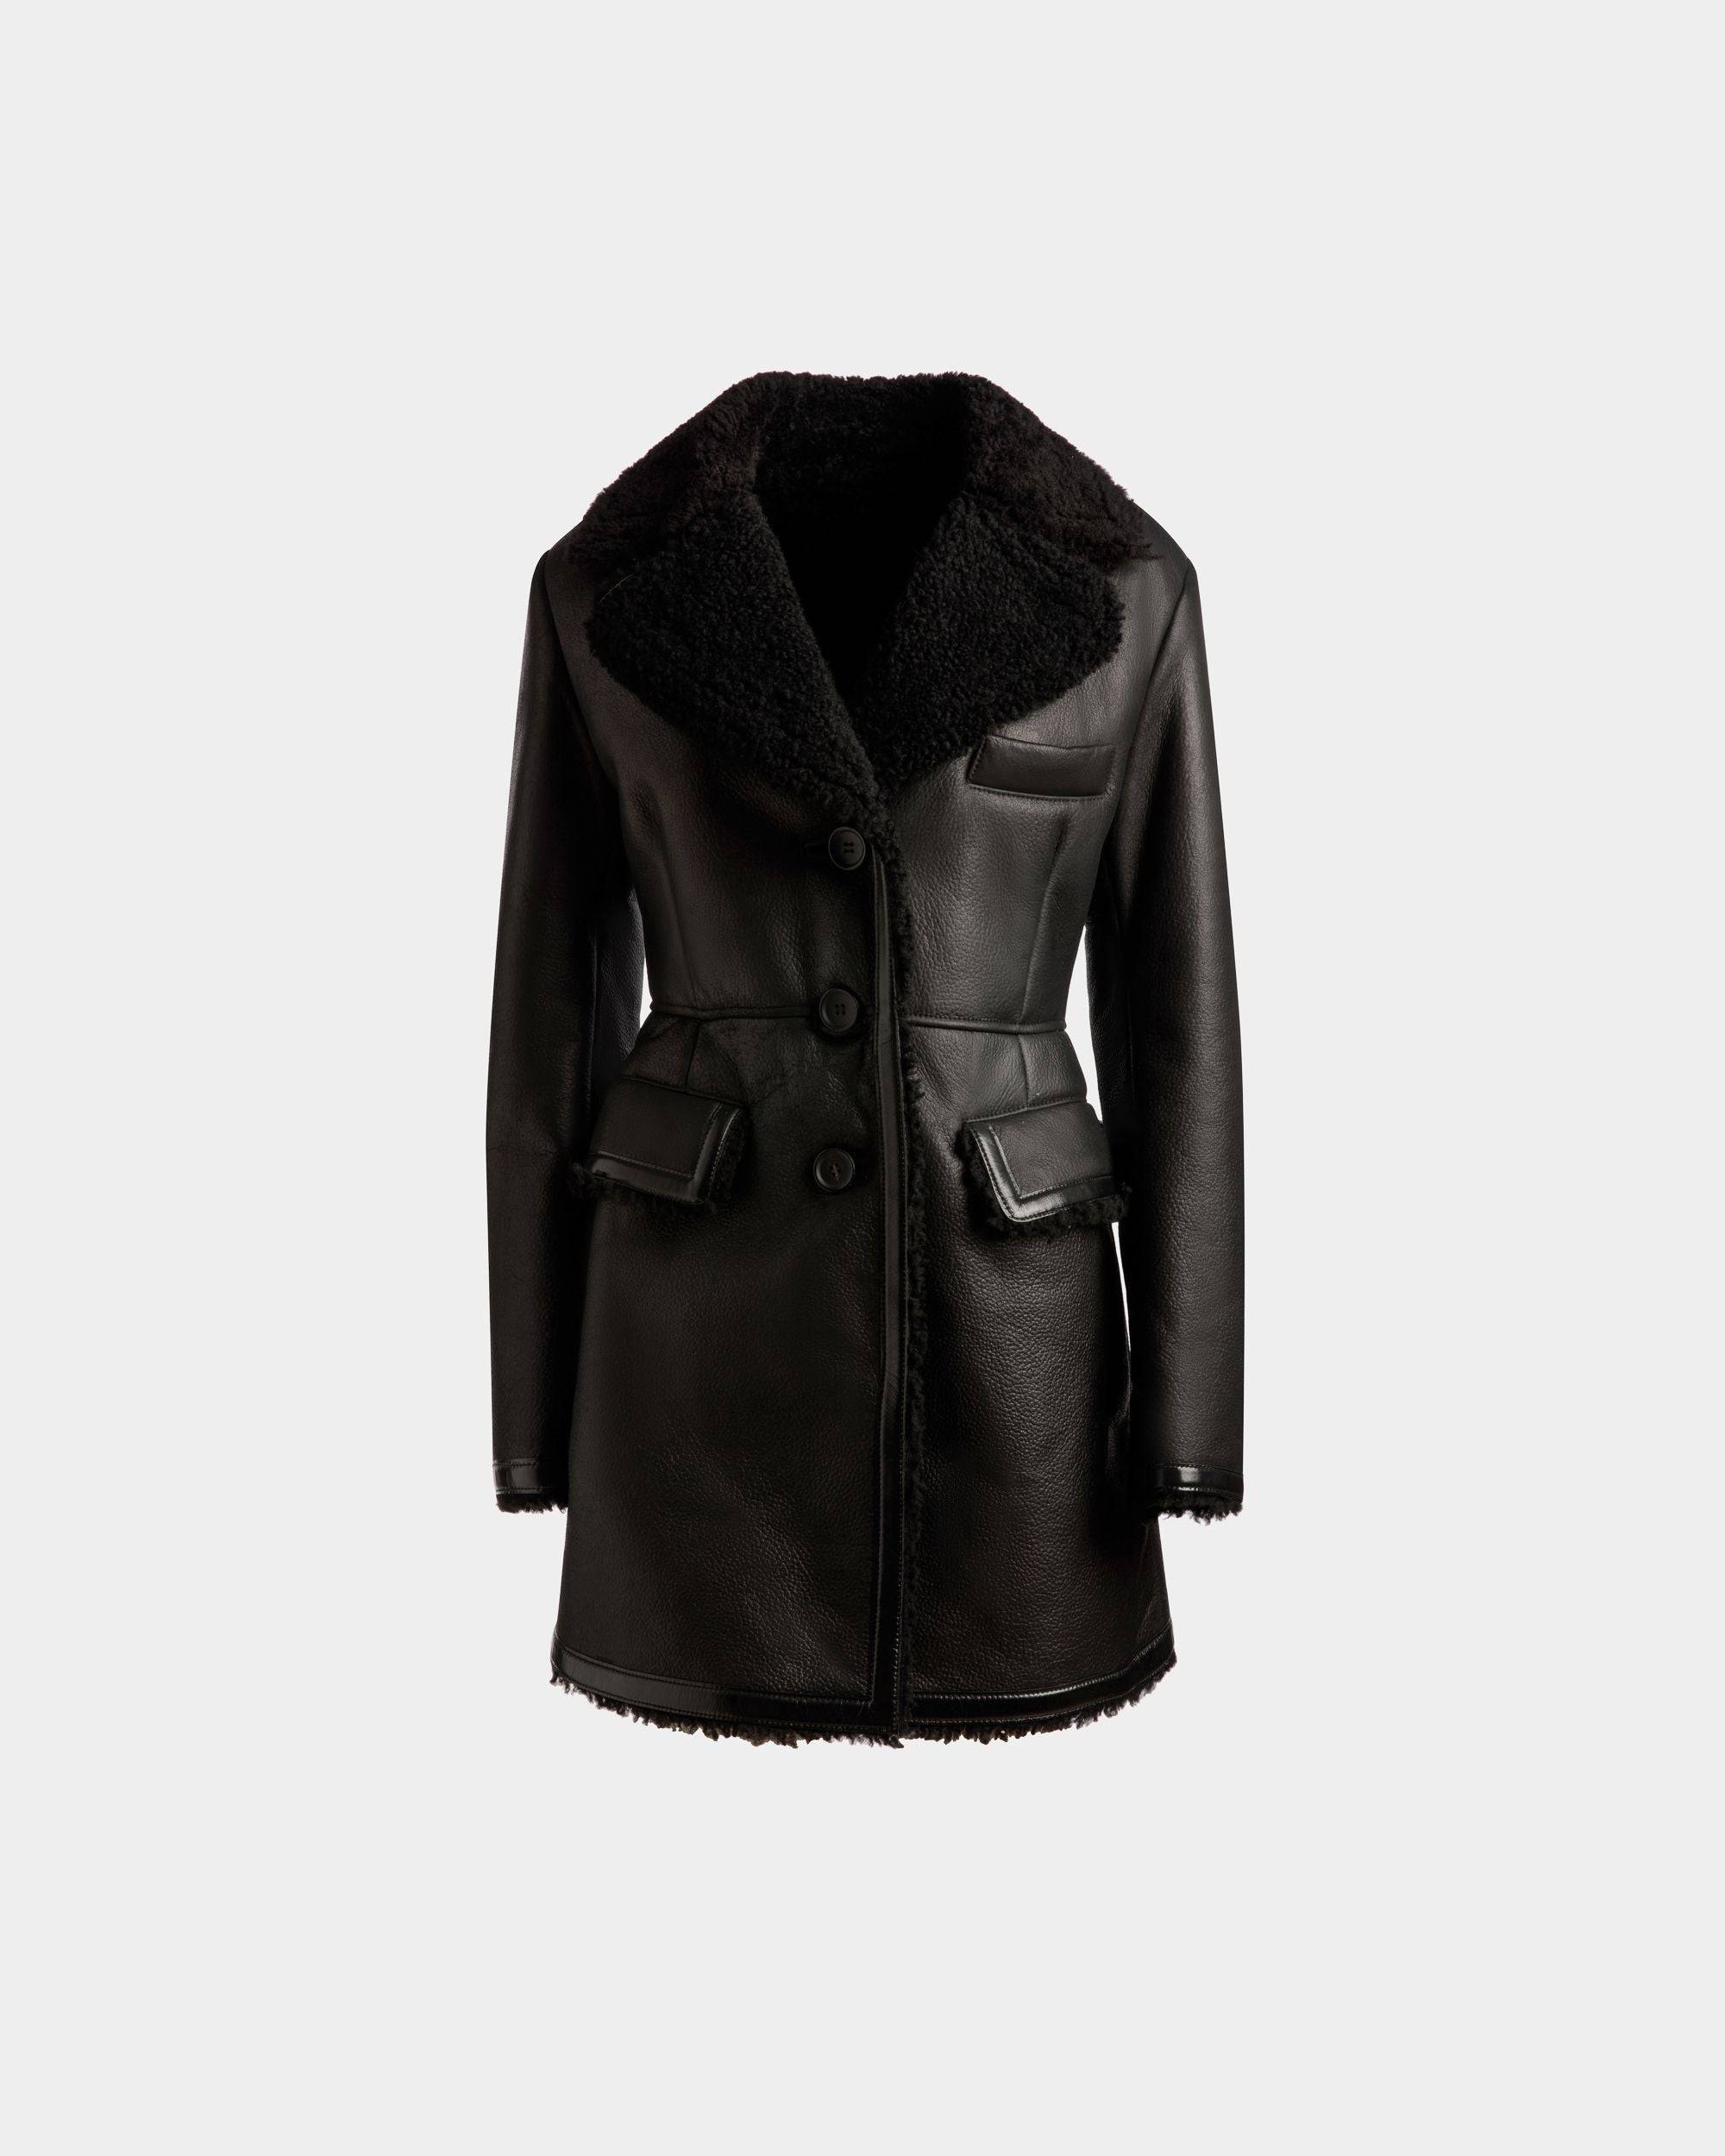 Harrington Jacket - Black, Women's Coats & Jackets